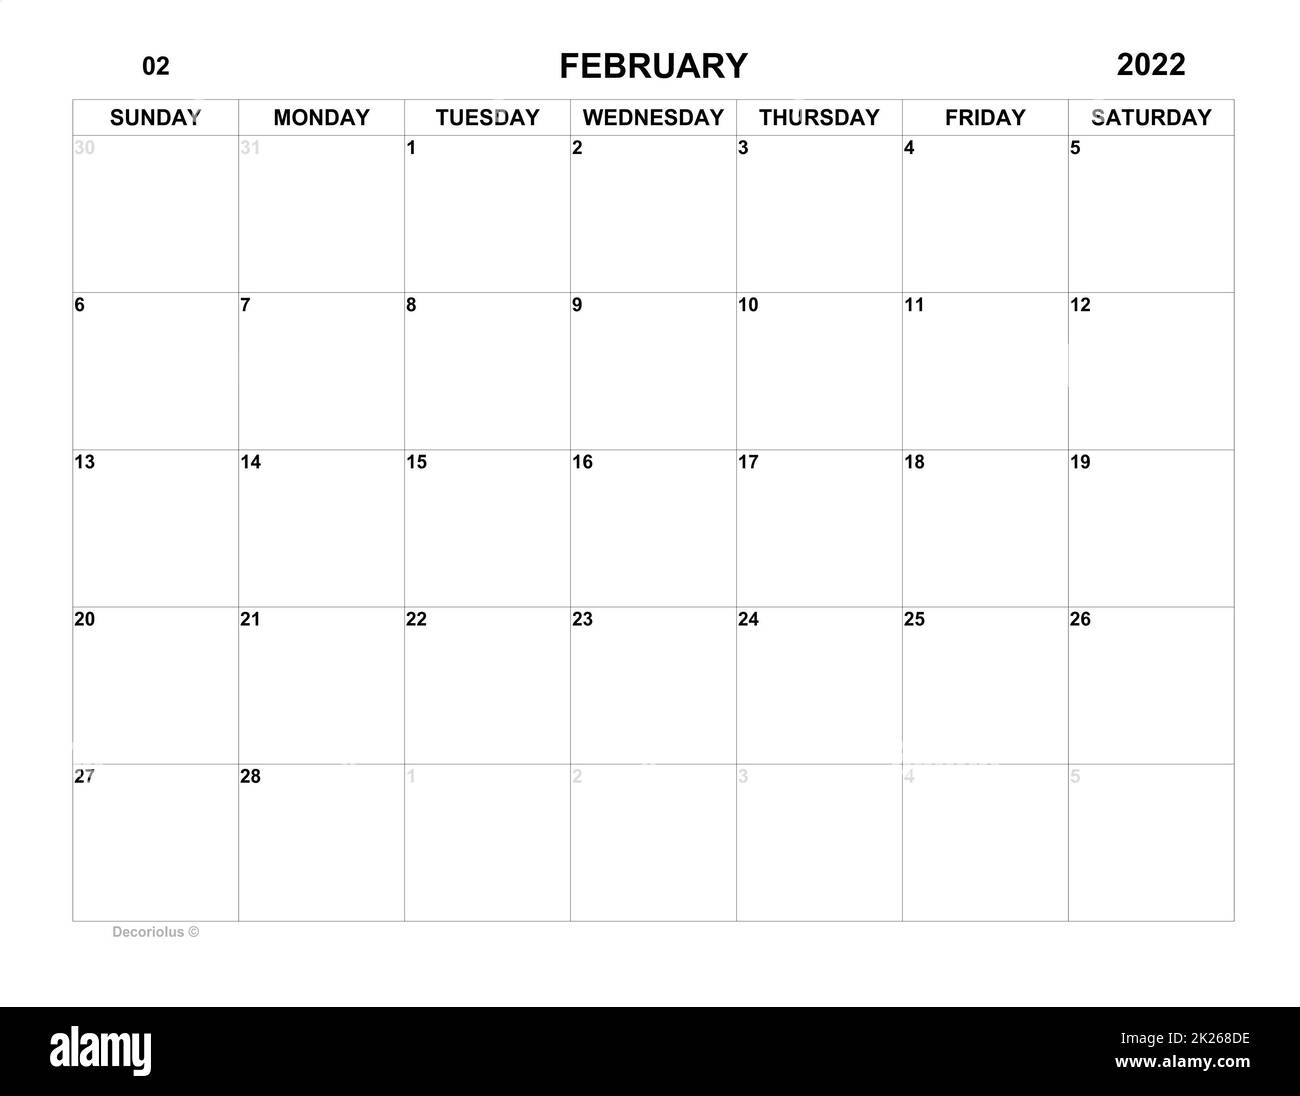 February calendar black and white stock photos images